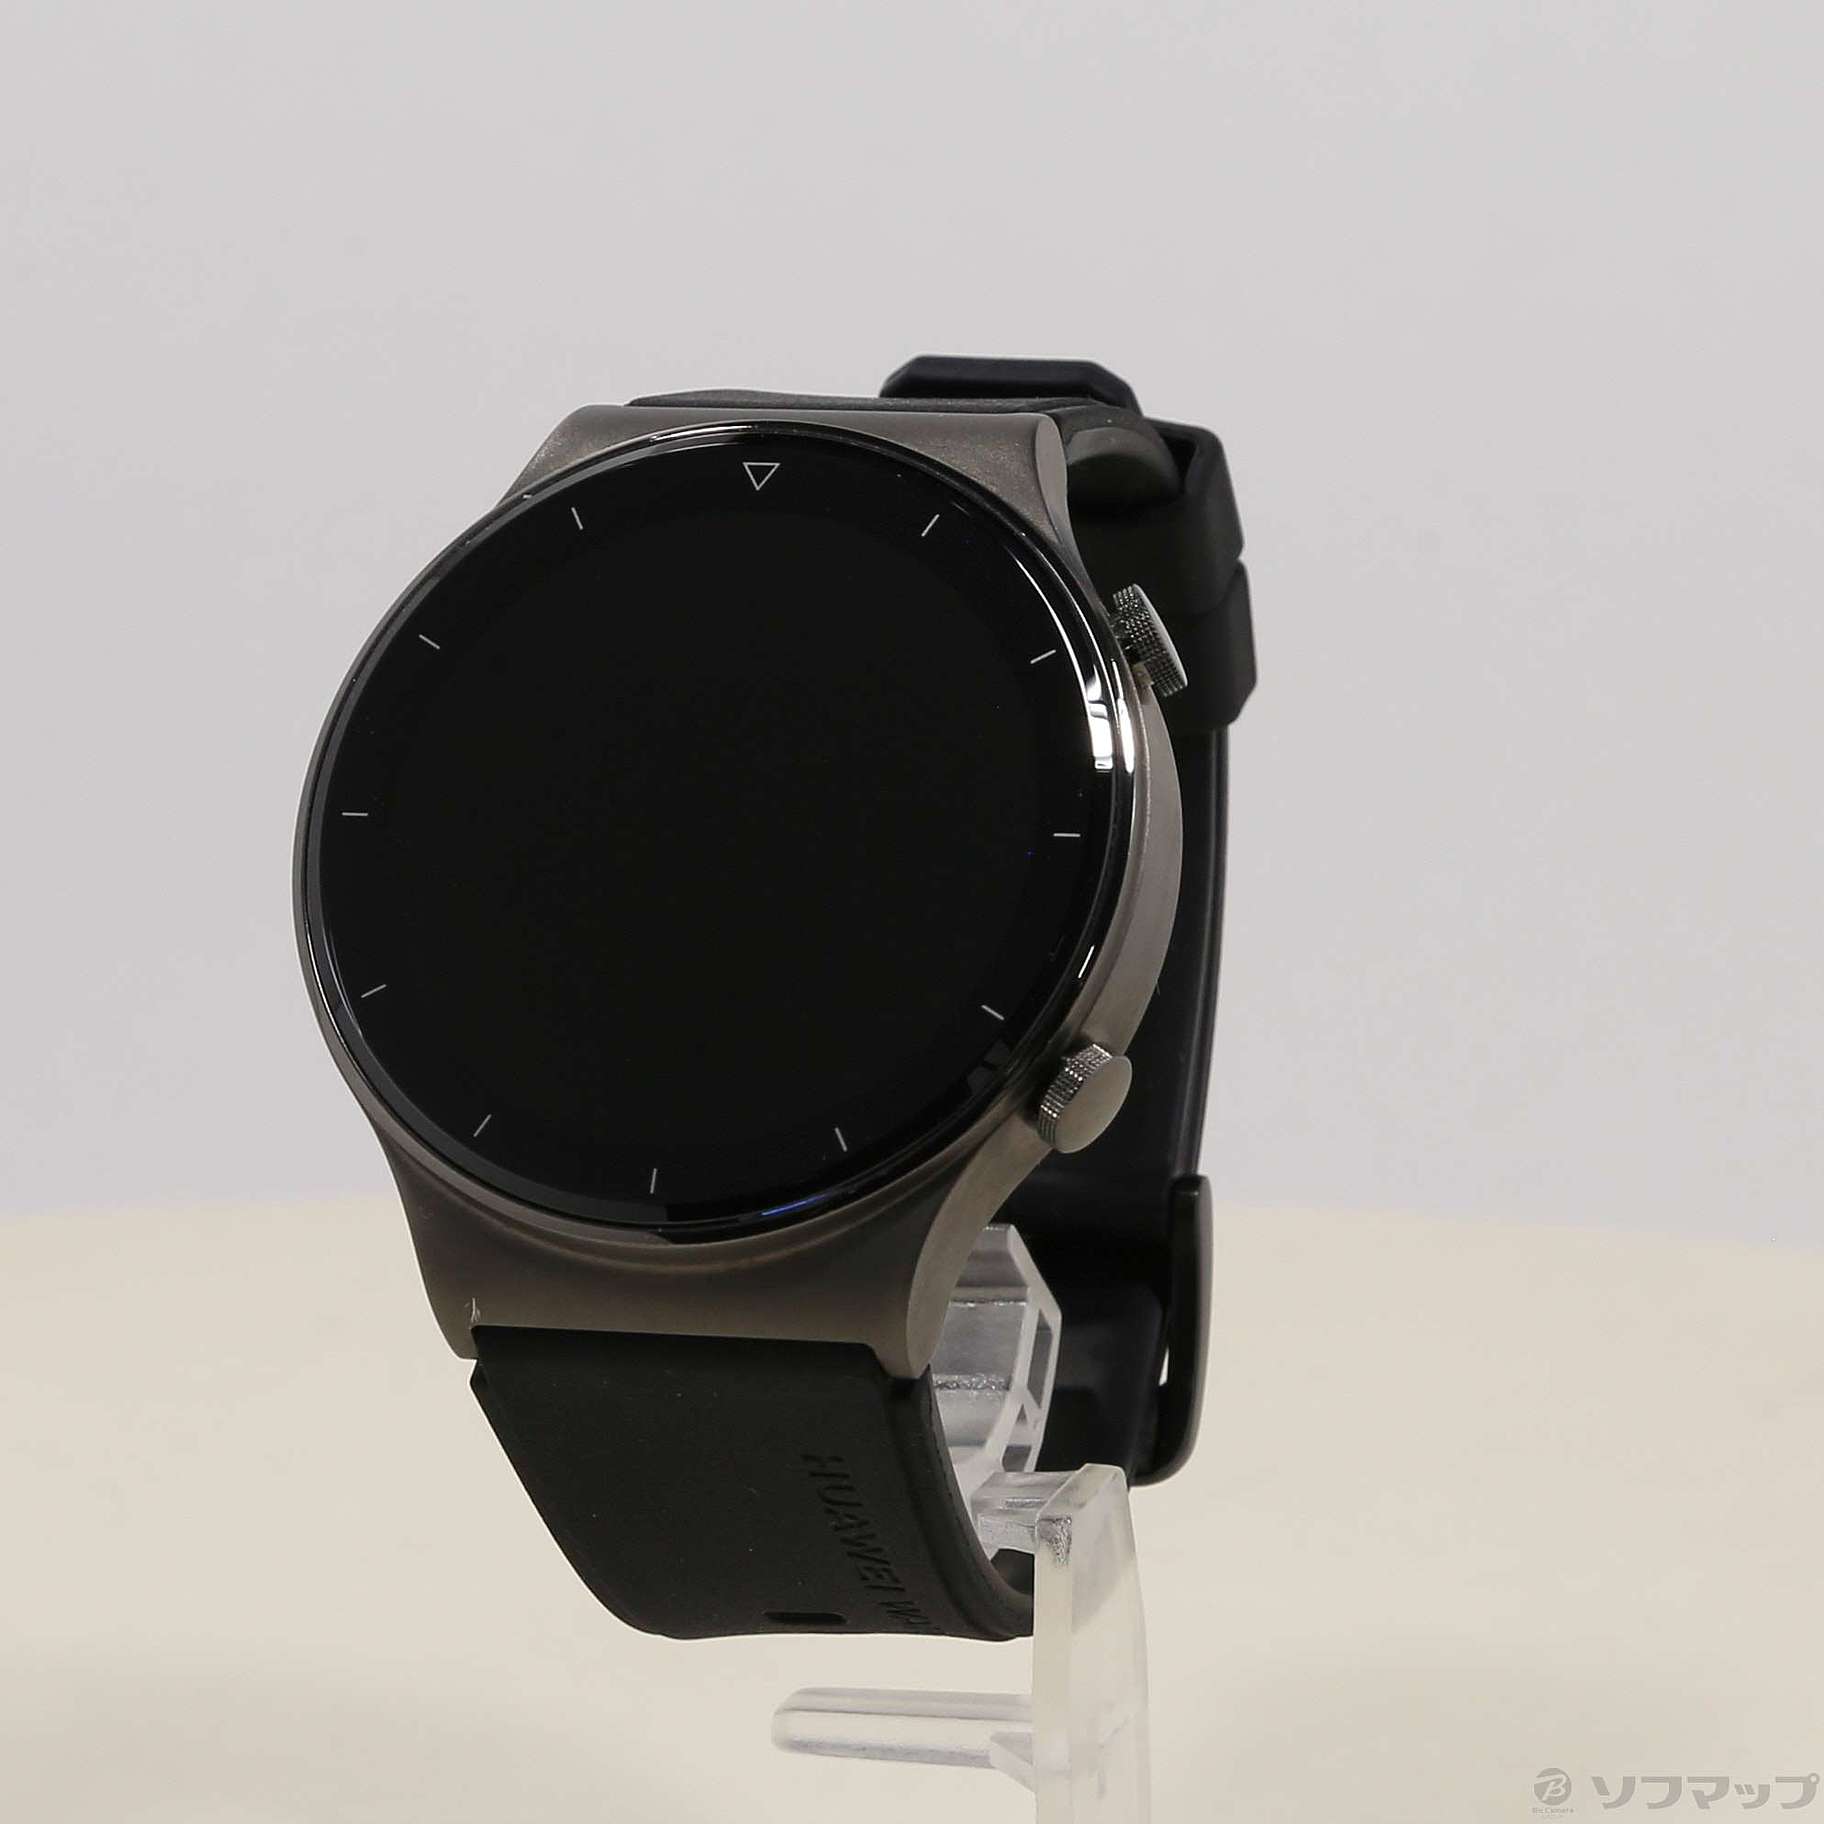 HUAWEI WATCH GT 2 Pro ナイトブラック 新品腕時計(デジタル) - 腕時計 